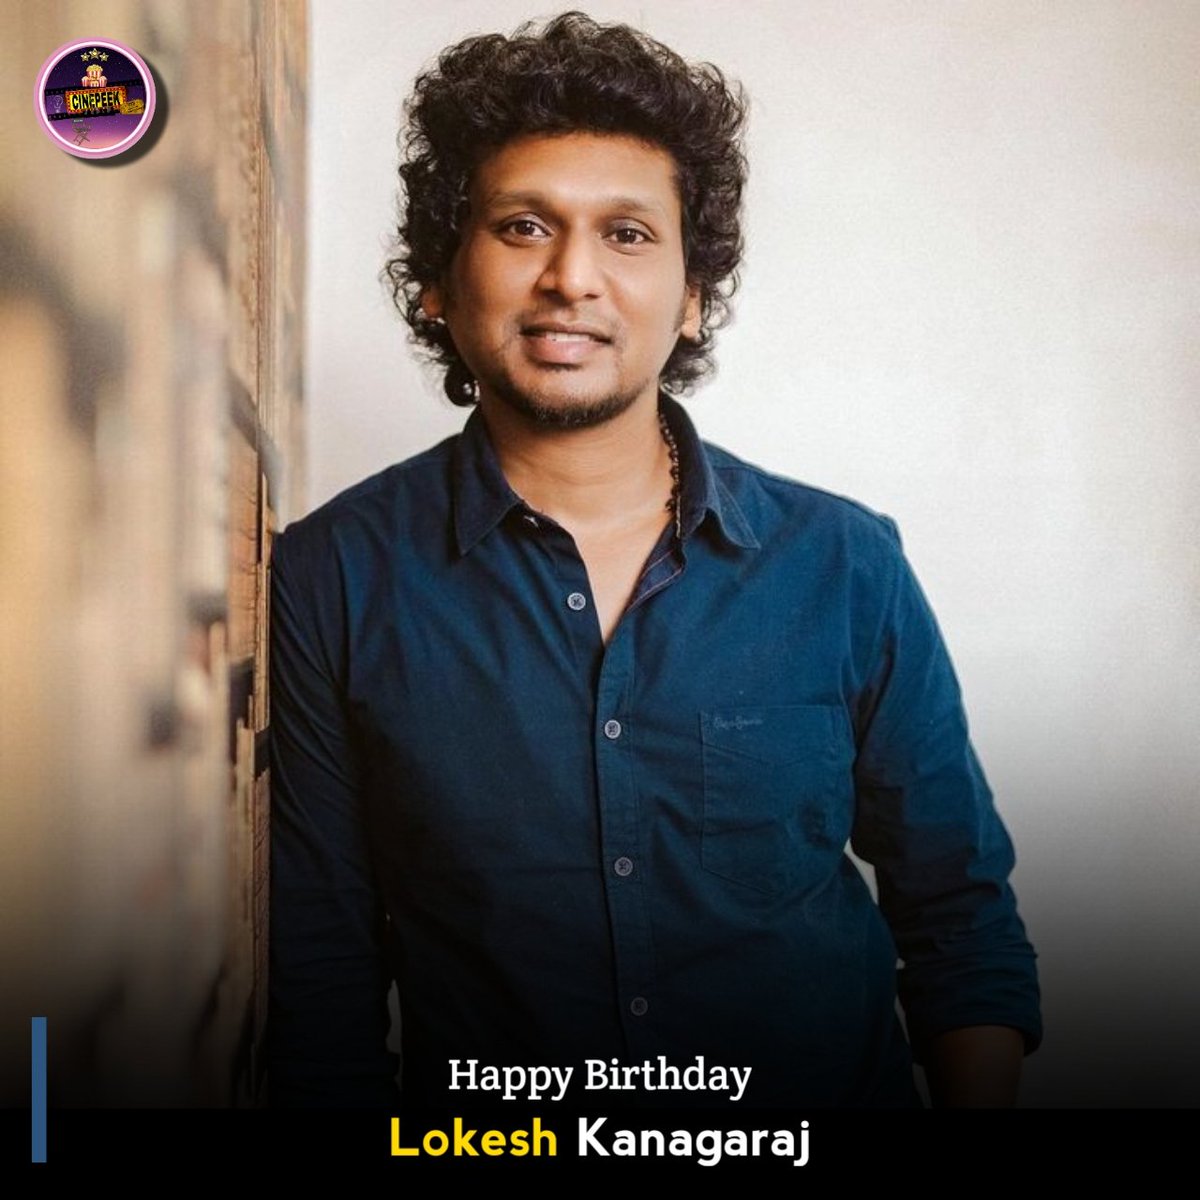 Happy Birthday Film Maker #LokeshKanagaraj 🎂 #HBDLokeshKanagaraj #LCU #CinePeek